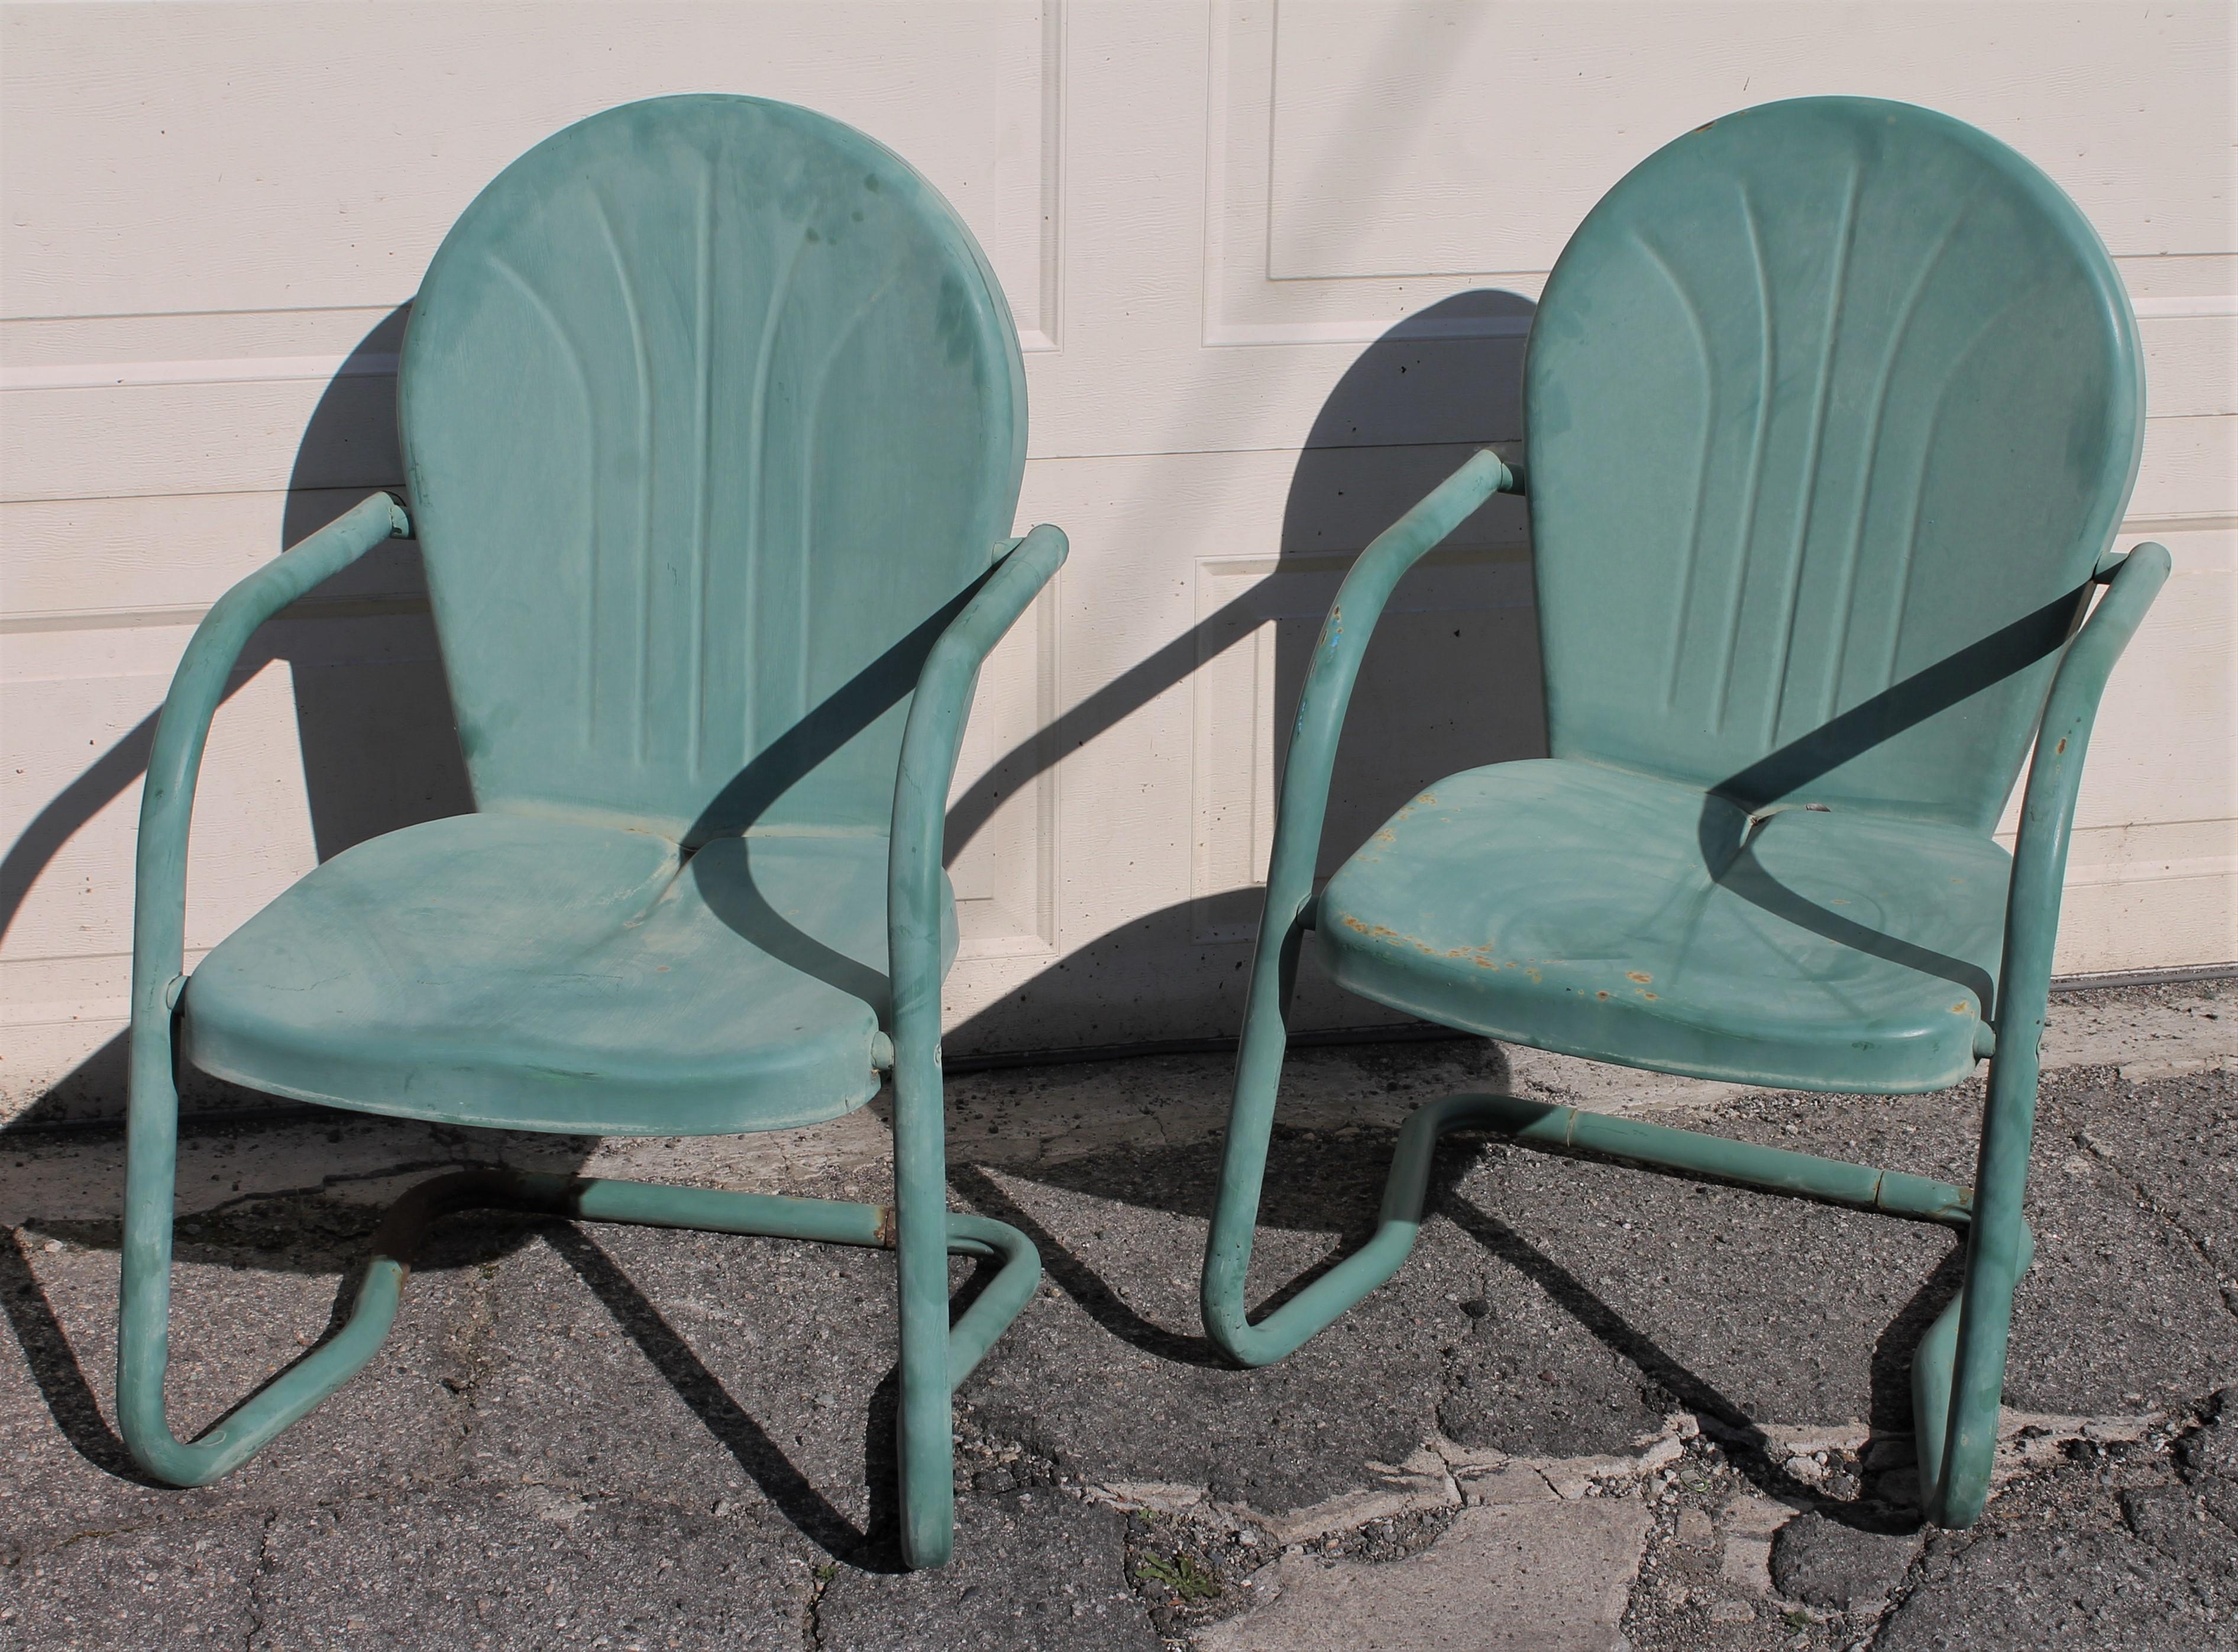 Adirondack Outdoor Lawn/ Beach Metal Chairs in Sea Foam Green, 4